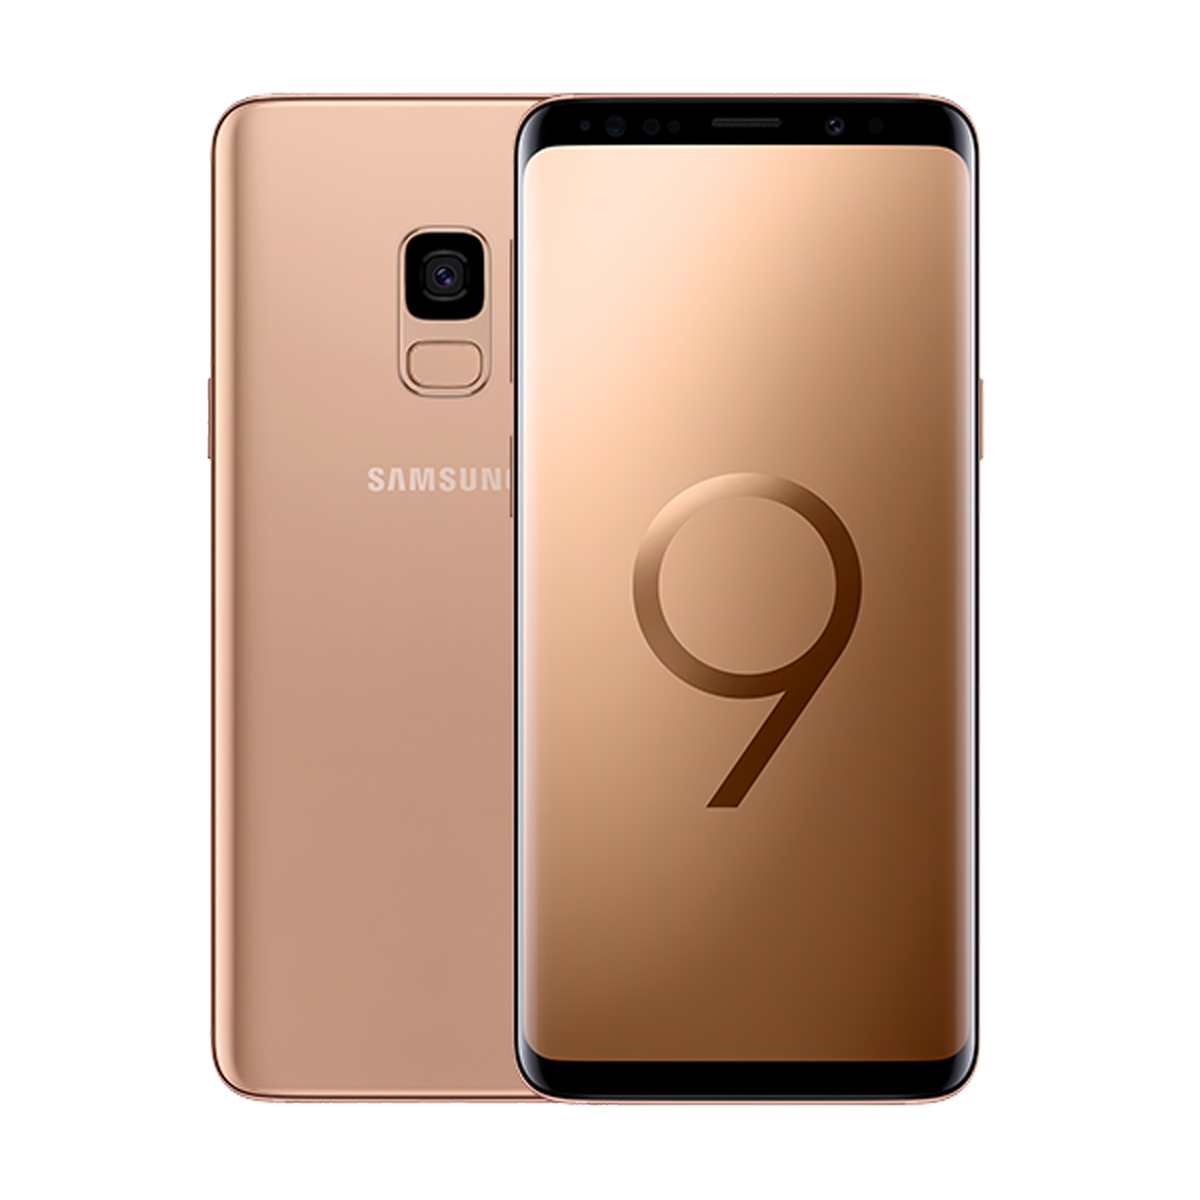 Refurbished Samsung Galaxy S9 64 GB Gold B-grade